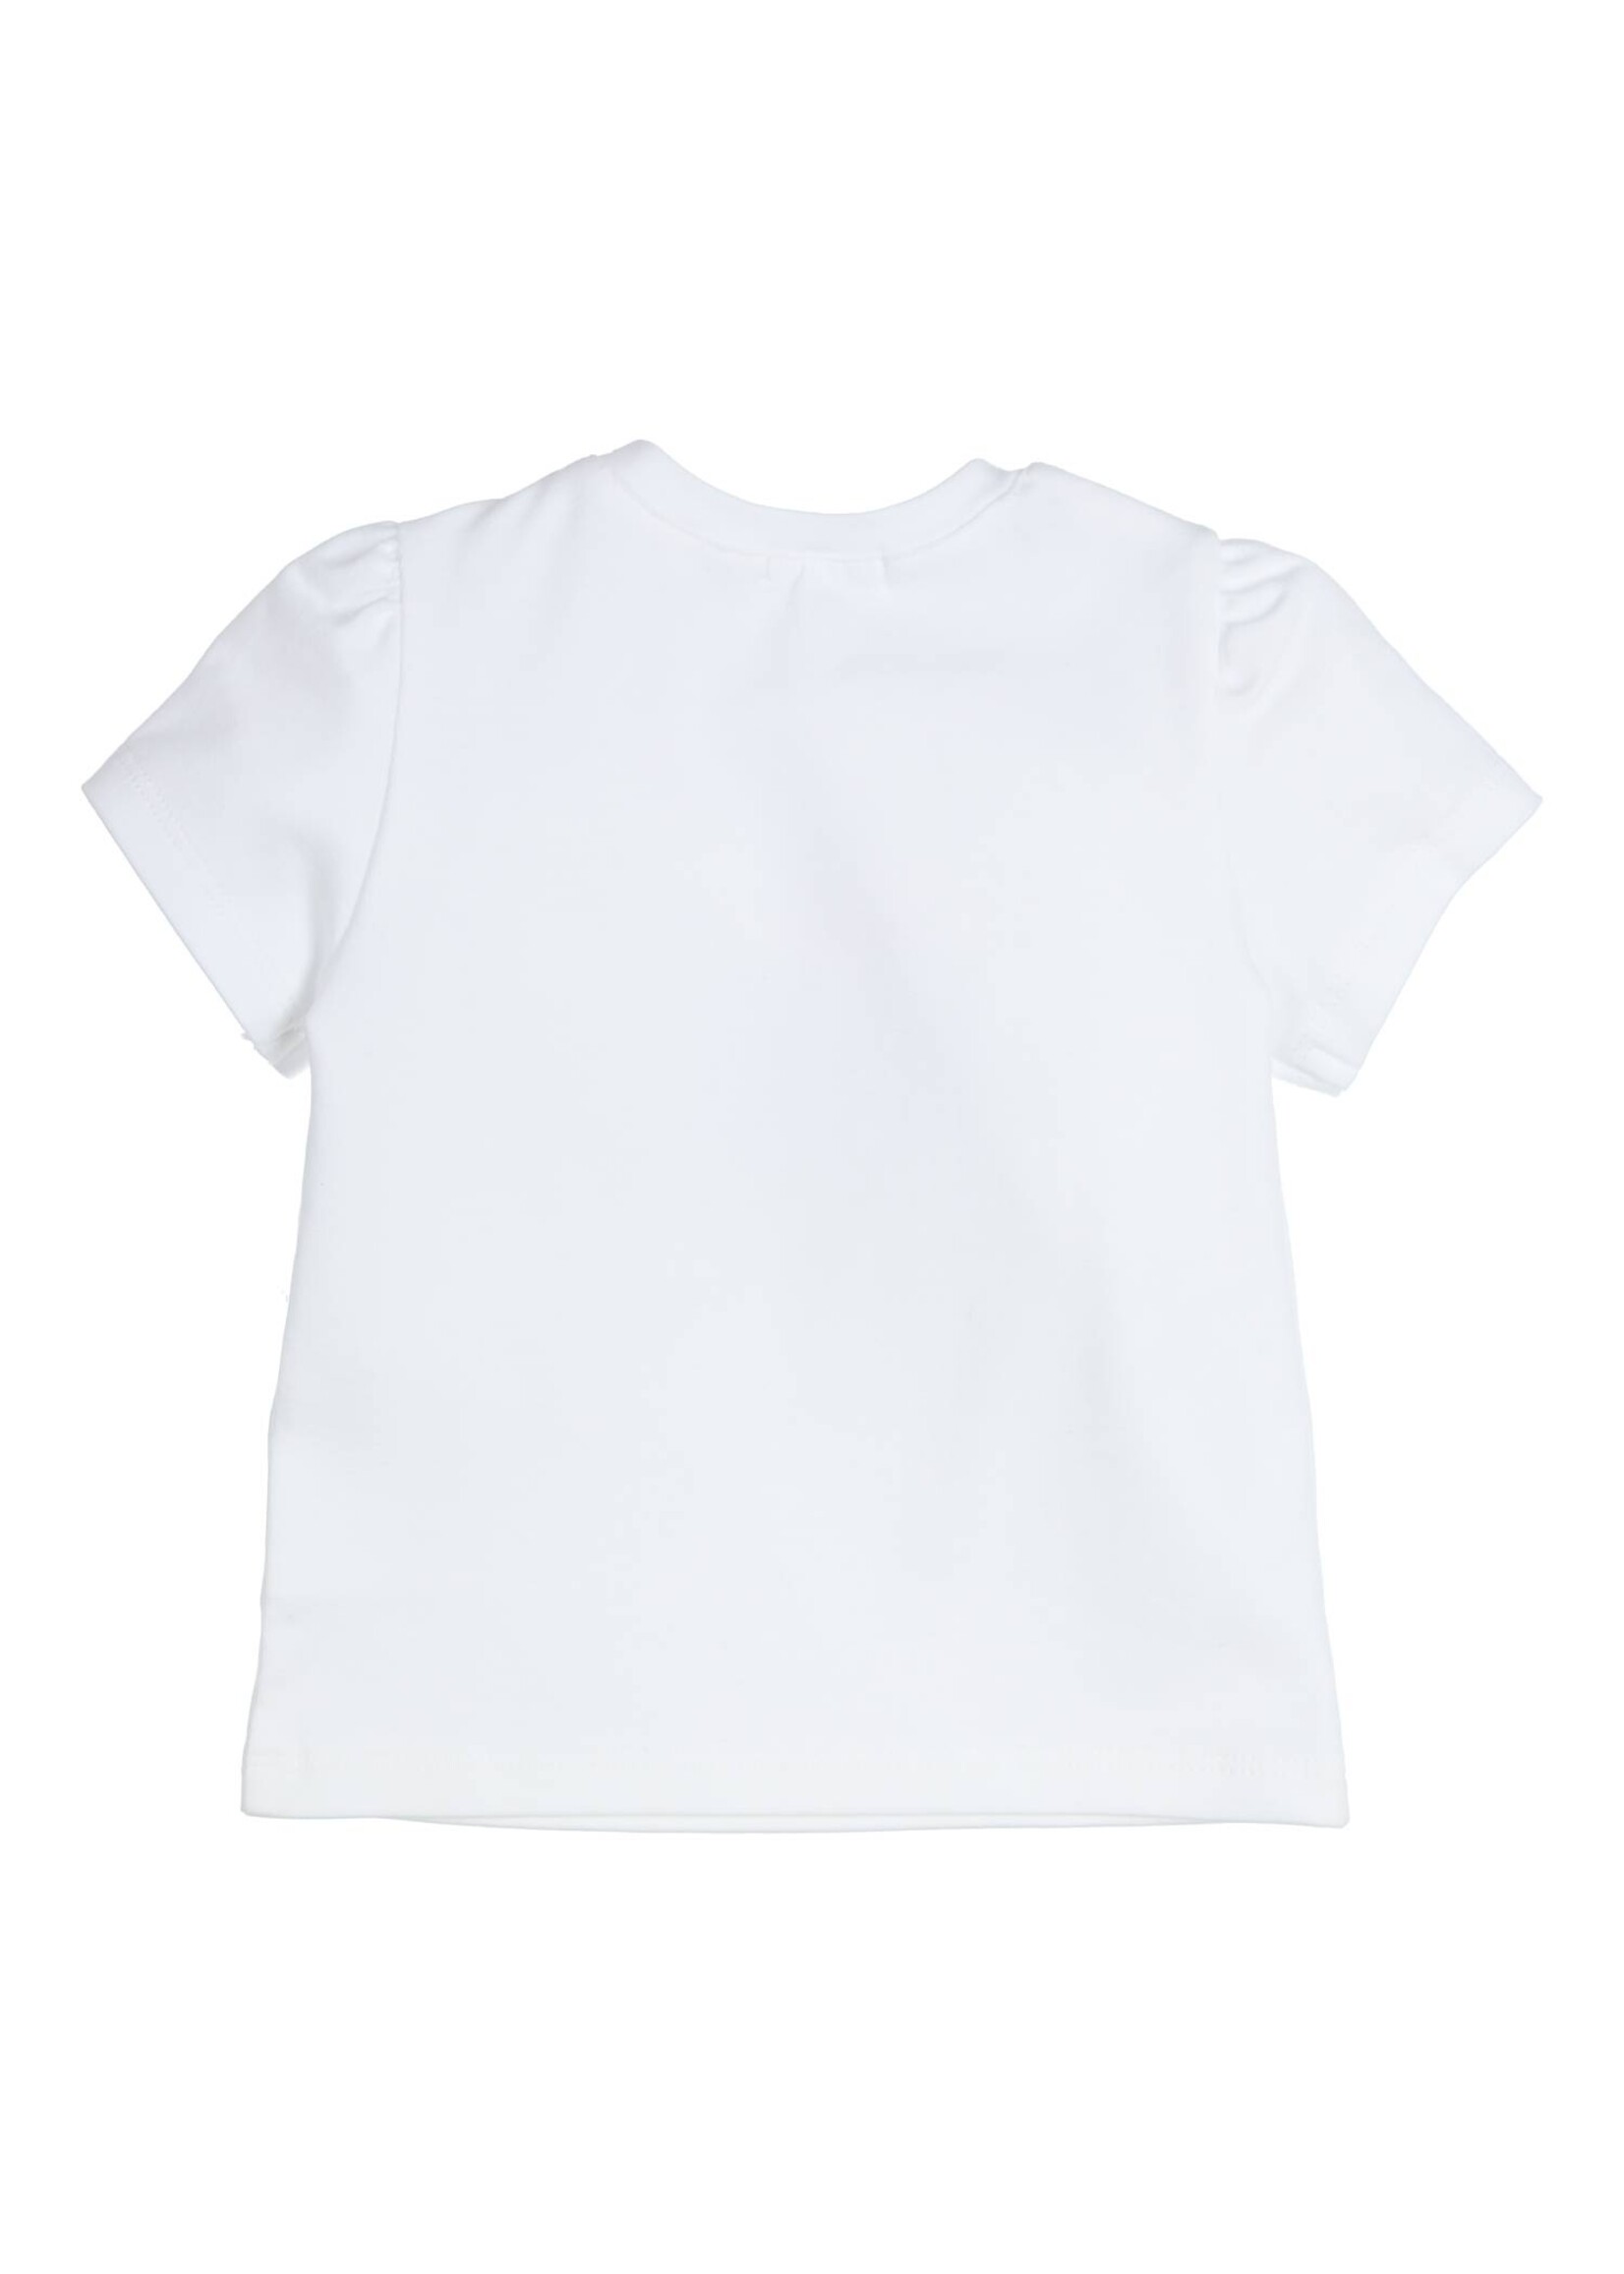 Gymp Girls T-shirt Aerobic Best Day Ever 353-4231-10 White